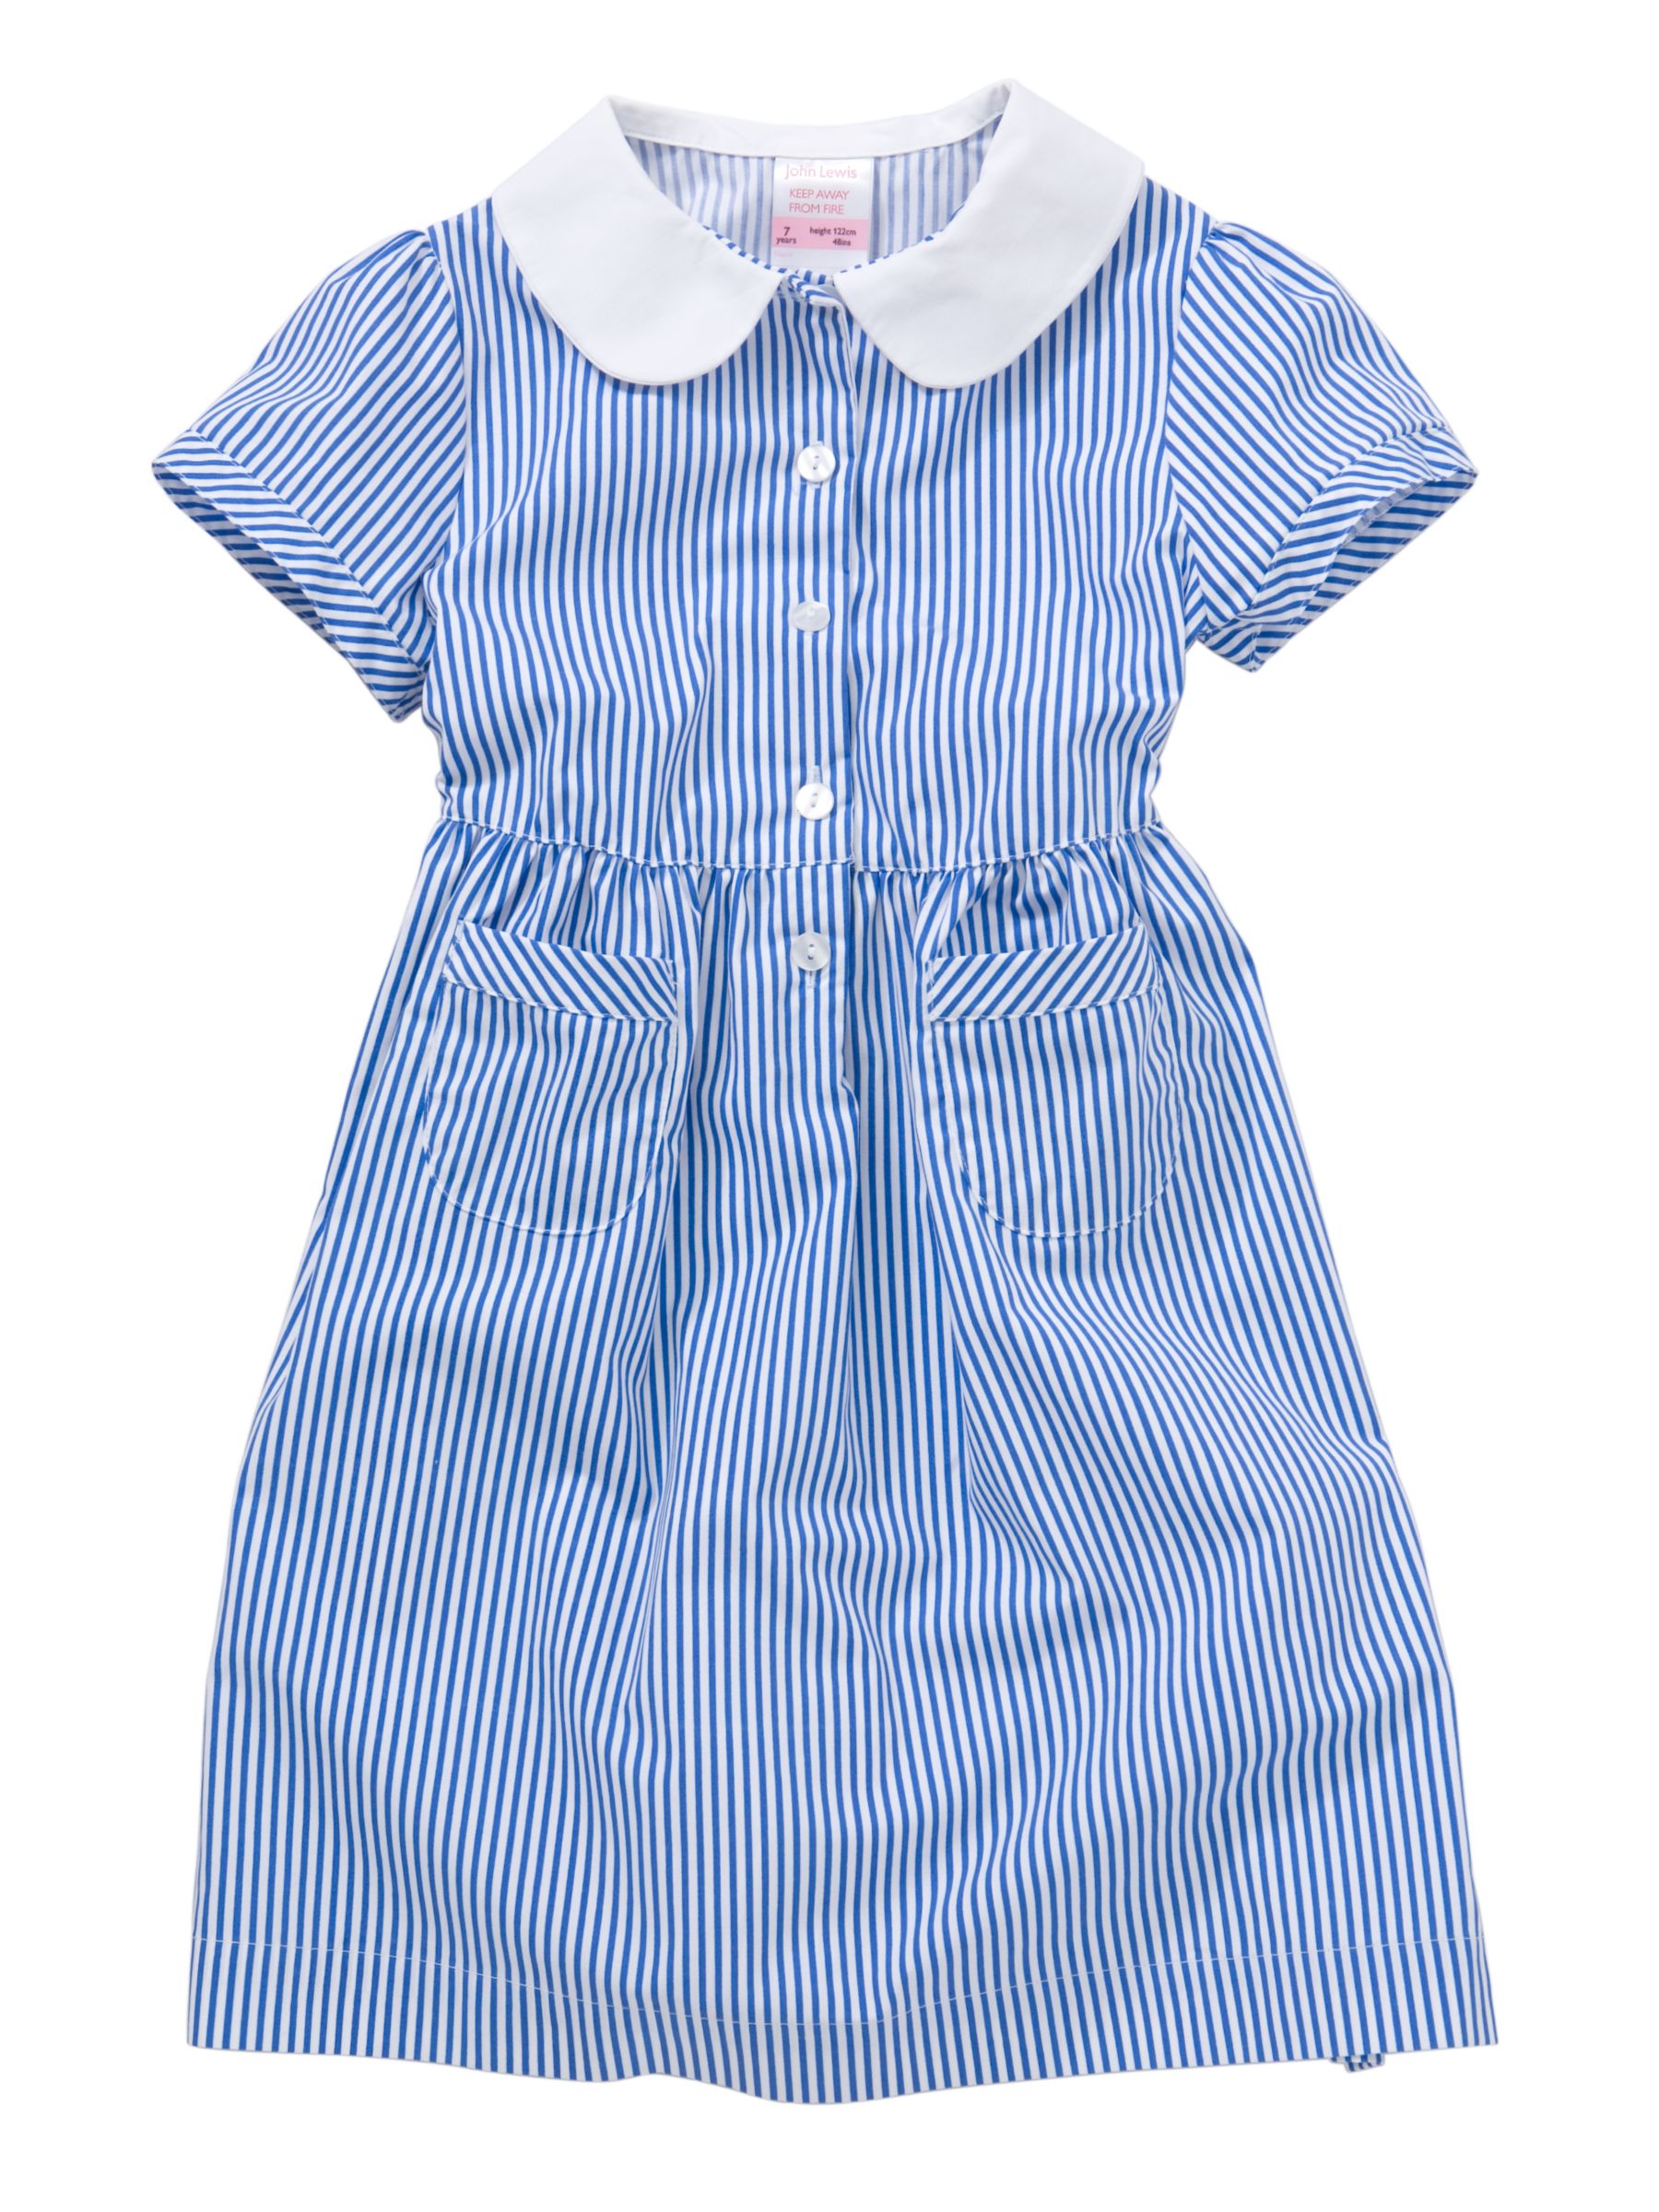 John Lewis School Striped Summer Dress, Blue at John Lewis & Partners